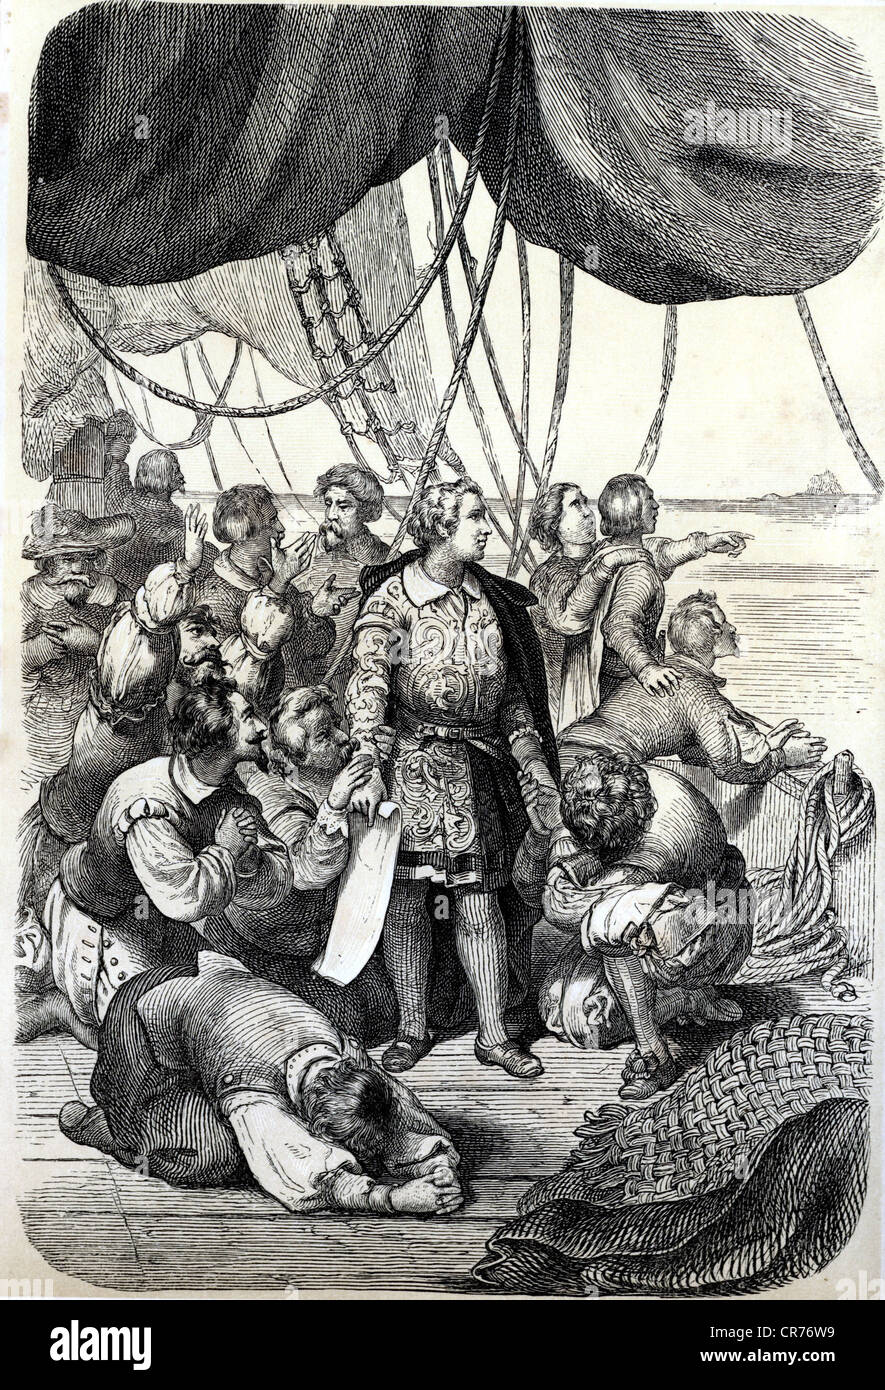 Columbus, Christopher, 1451 - 1506, explorer, image from the book'Das Leben des Meeres'(life in the sea), 1862, Stock Photo